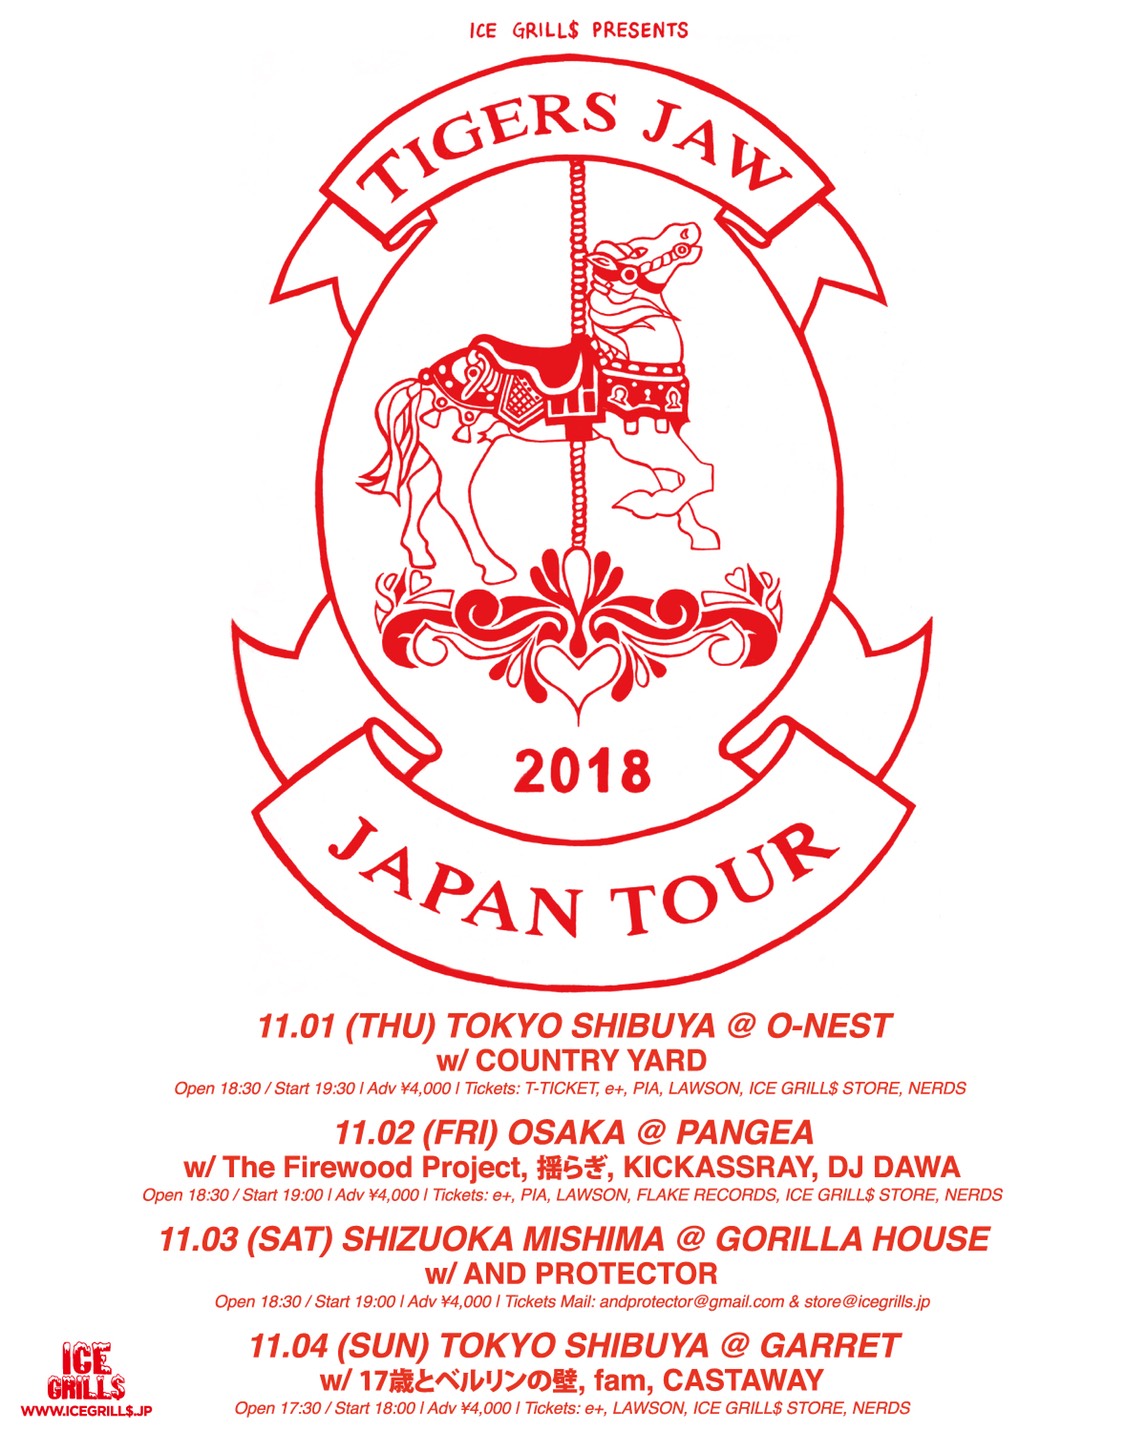 TIGERS JAW japan tour